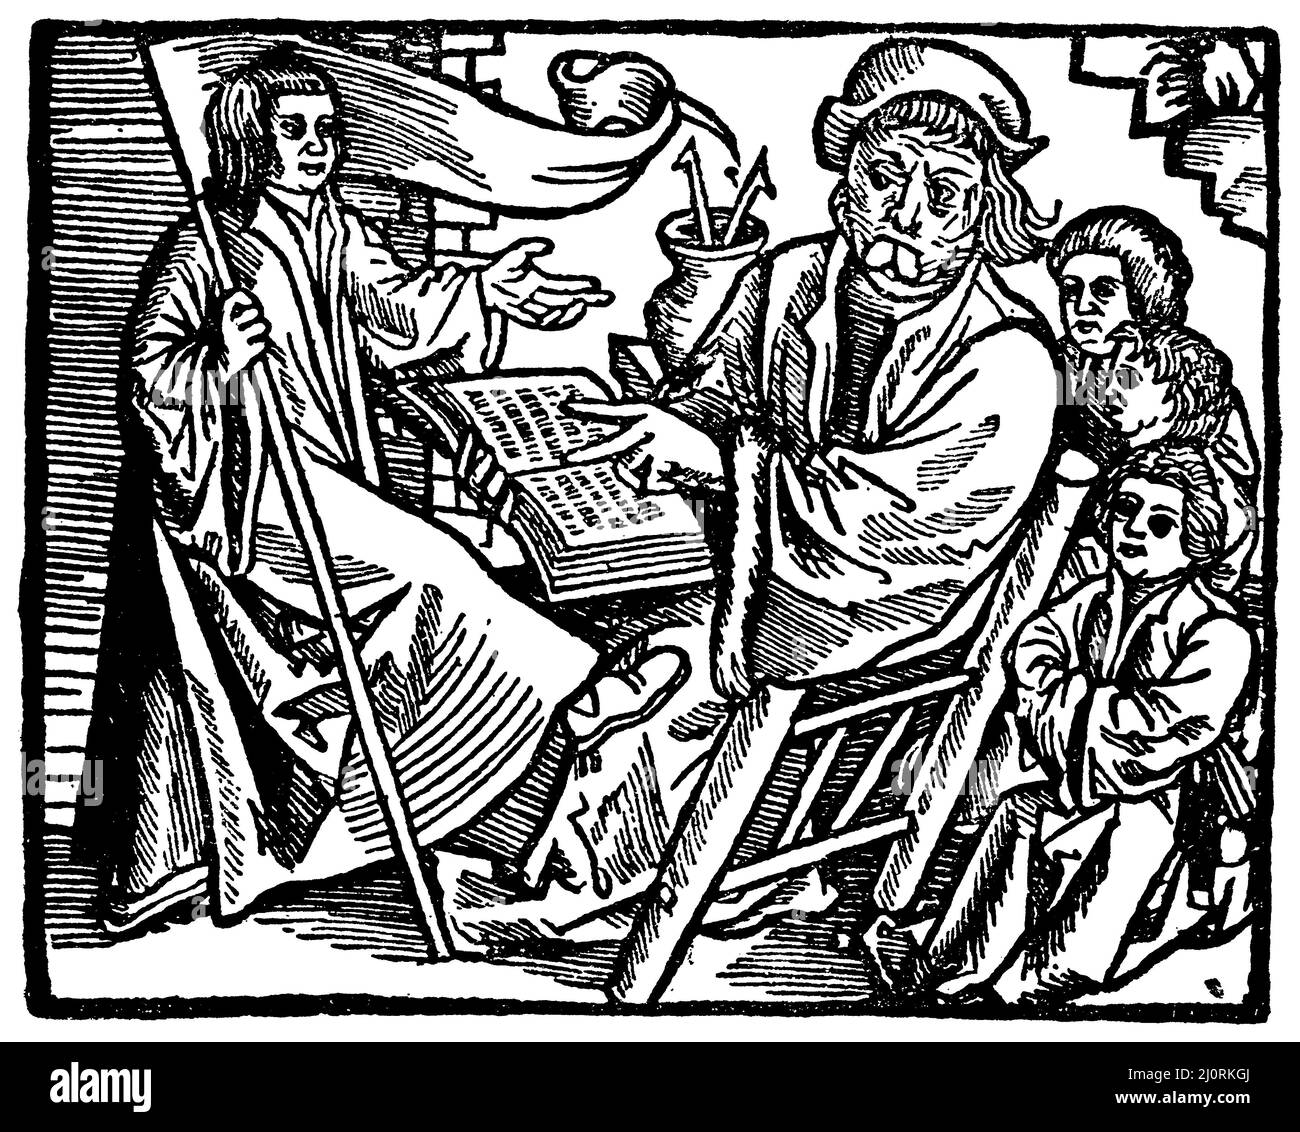 Reuchlin, Johannes (1455-1522), filósofo alemán y humanista - caricatura de los oscuros de Colonia en Johannes Reuchlin (Reuchlin es representado como duplicado)., , (libro de historia religiosa, 1923), Reuchlin, Johannes (1455-1522), deutscher Philosoph und Humanist - Karikatur der Kölner Dunkelmänner auf Johannes Reuchlin (Reuchlin ist als doppelzüngig dargestellt), Reuchlin, Johannes (1455-1522), Philosophe et humaniste allemand - Caricature de Johannes Reuchlin par les obscurantistes de Cologne (redestent) Foto de stock